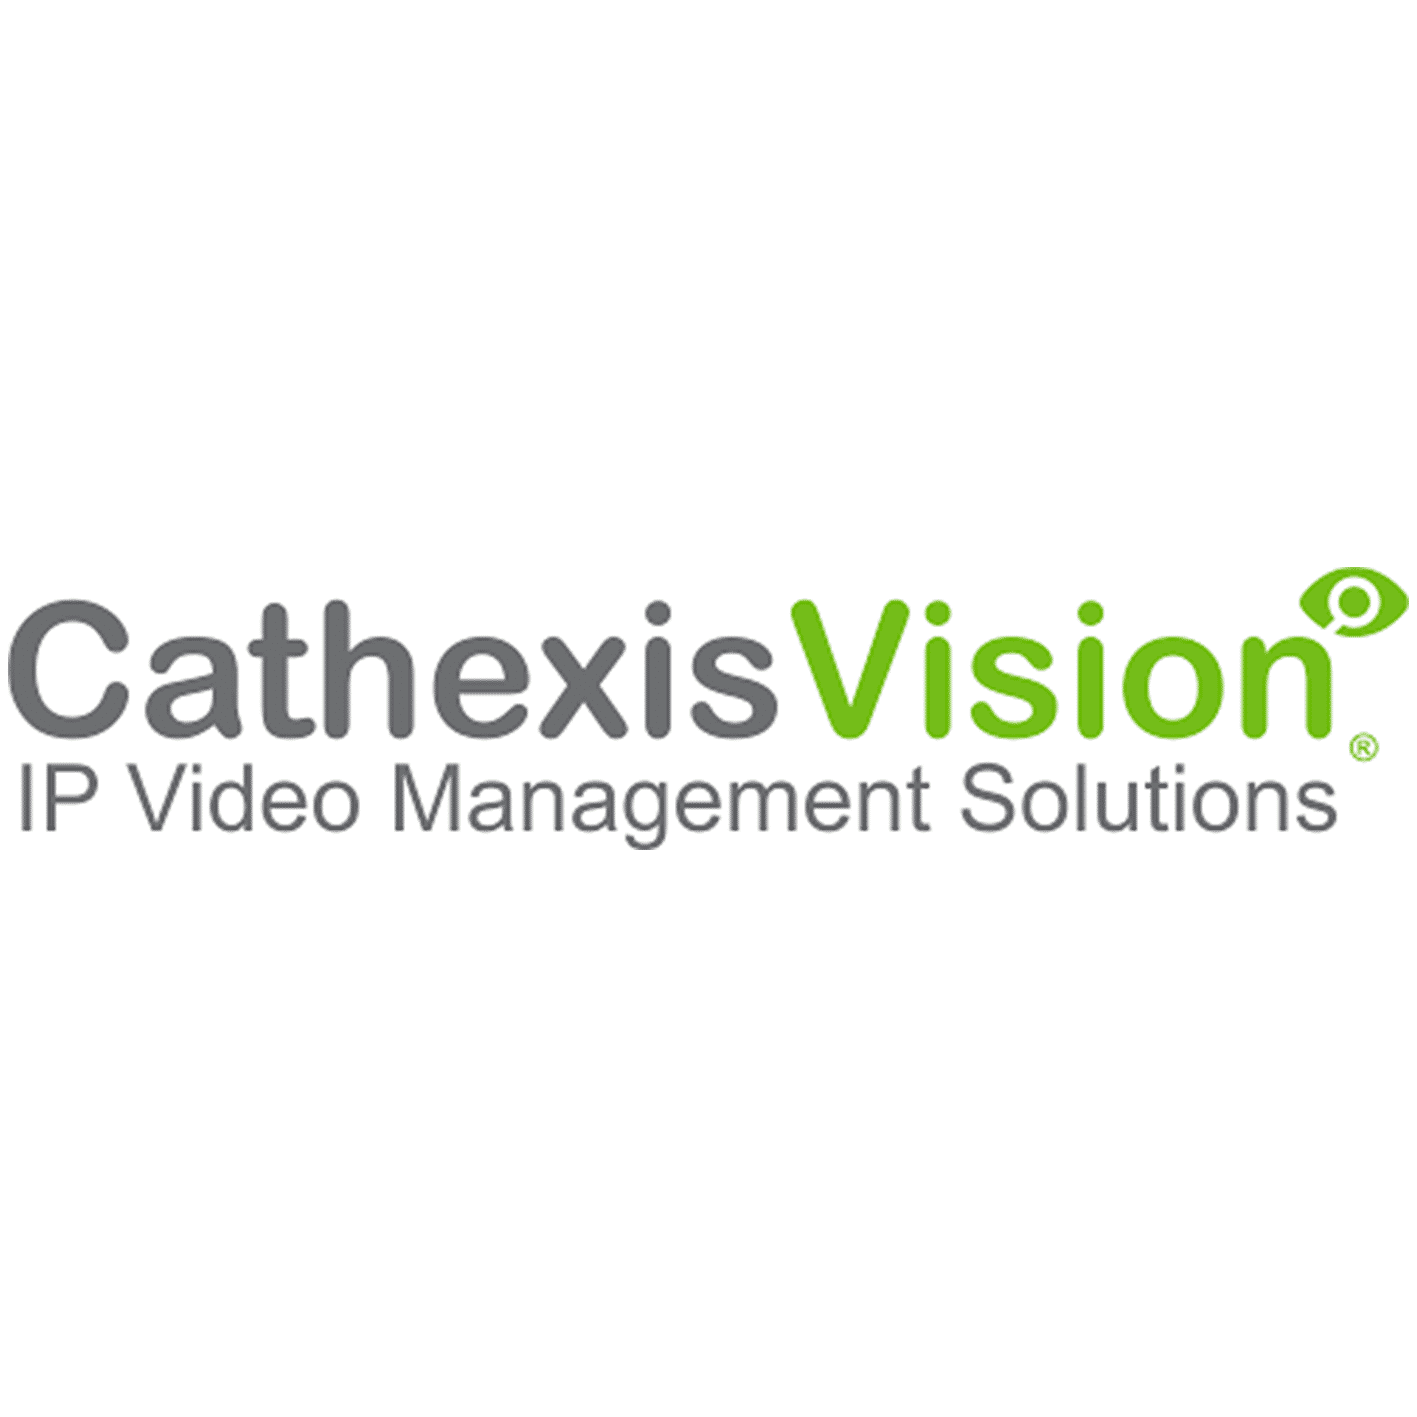 Cathexis logo